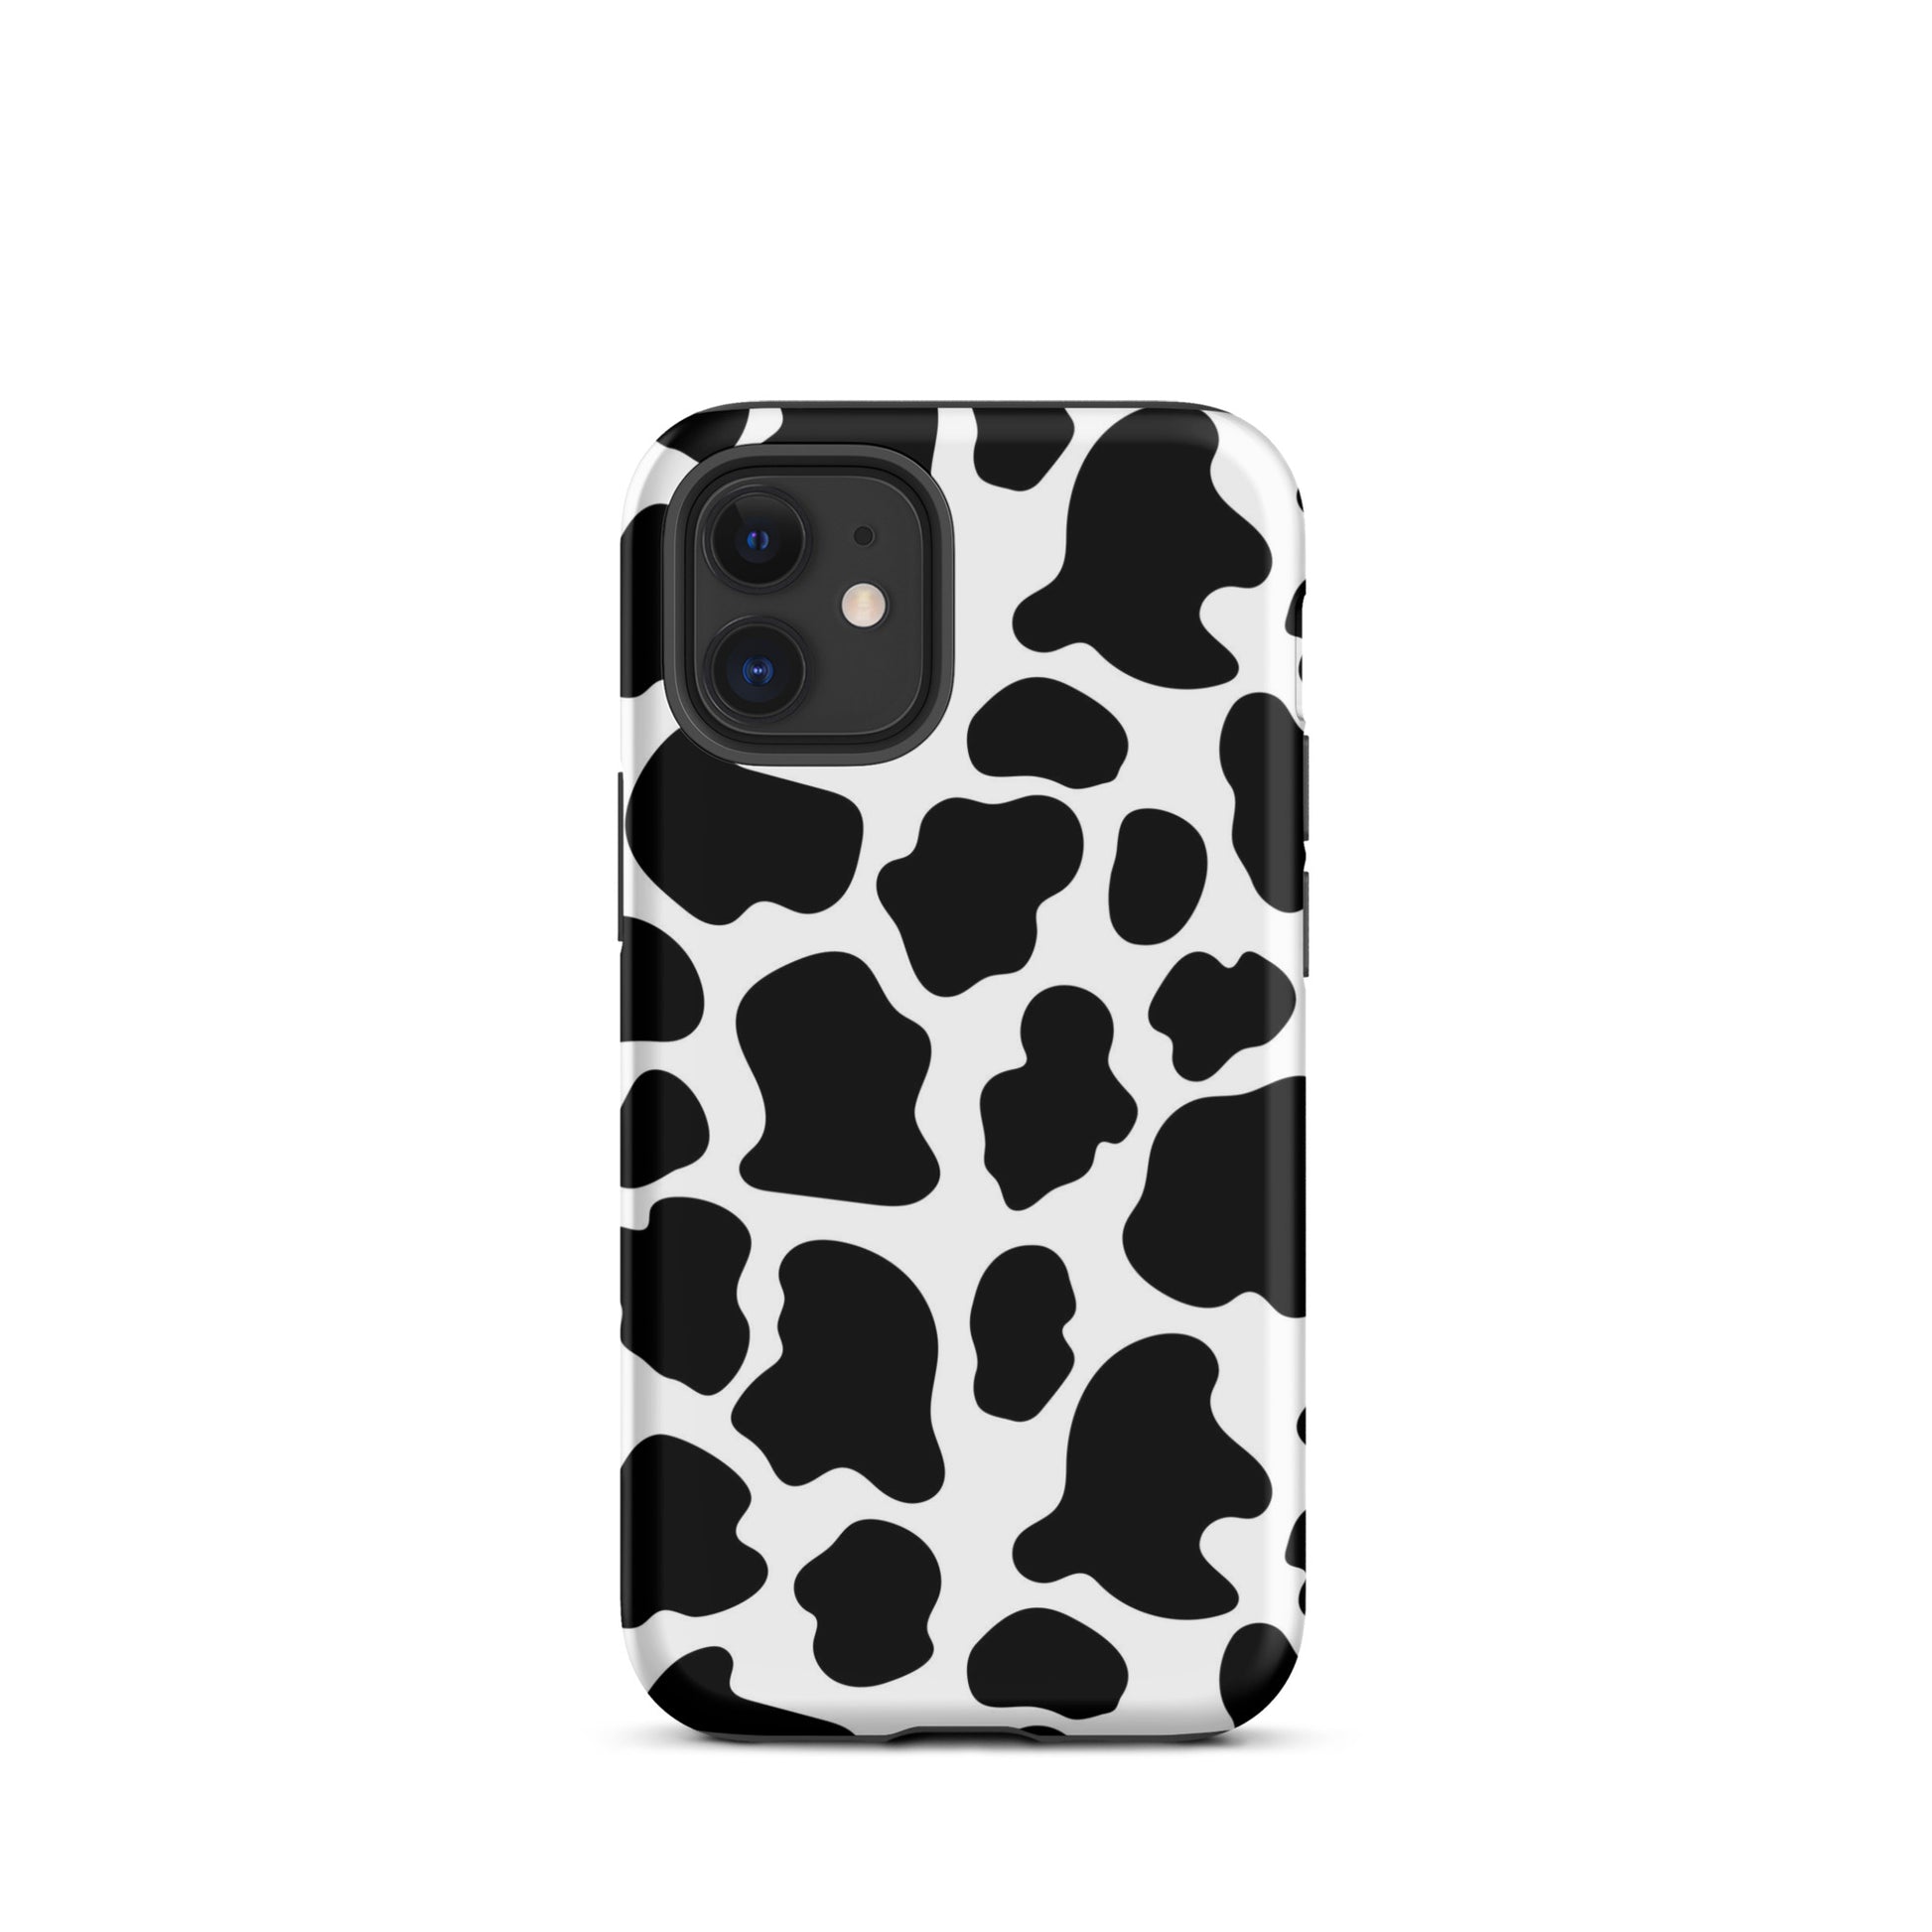 Cow Print iPhone Case iPhone 12 mini Matte